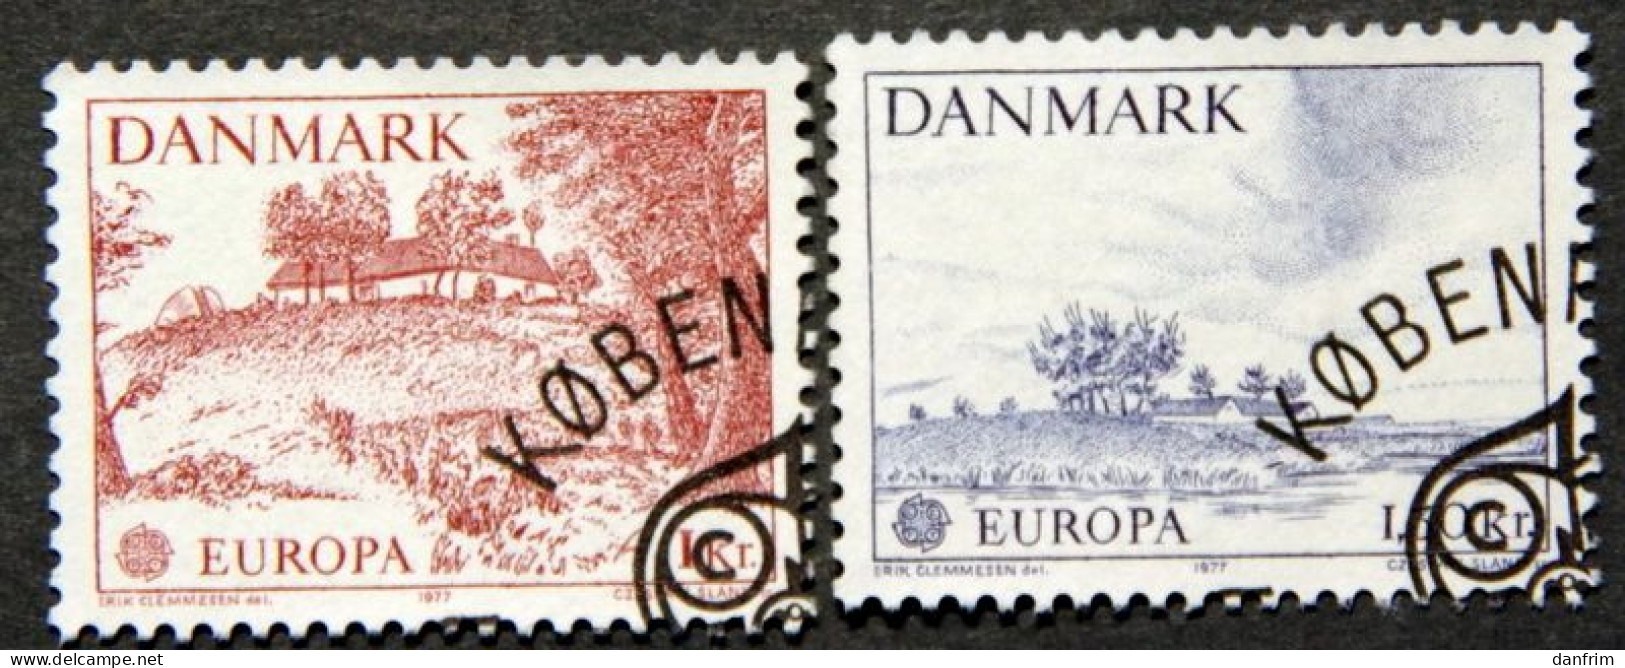 Danmark 1977 EUROPA  MiNr.639-40  (O). (lot K 660 ) - Gebruikt